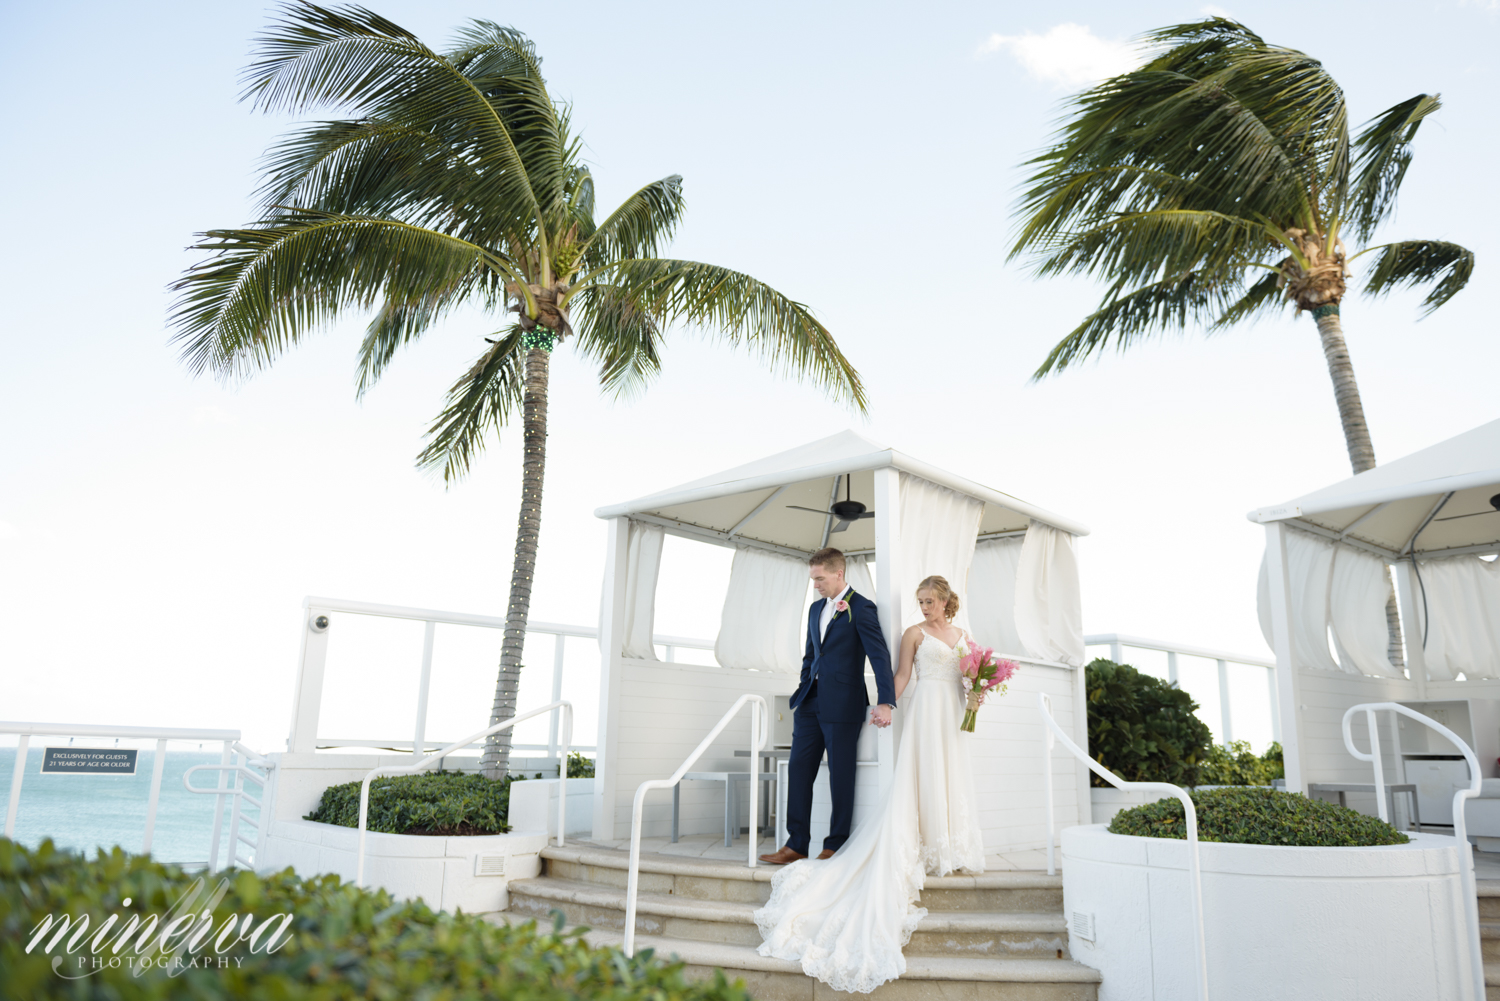 050_romantic-sunset-beach-wedding-photography_hilton-fort-lauderdale-beach-resort_south-florida_miami_broward_palm-beach_keys_orlando_photographer